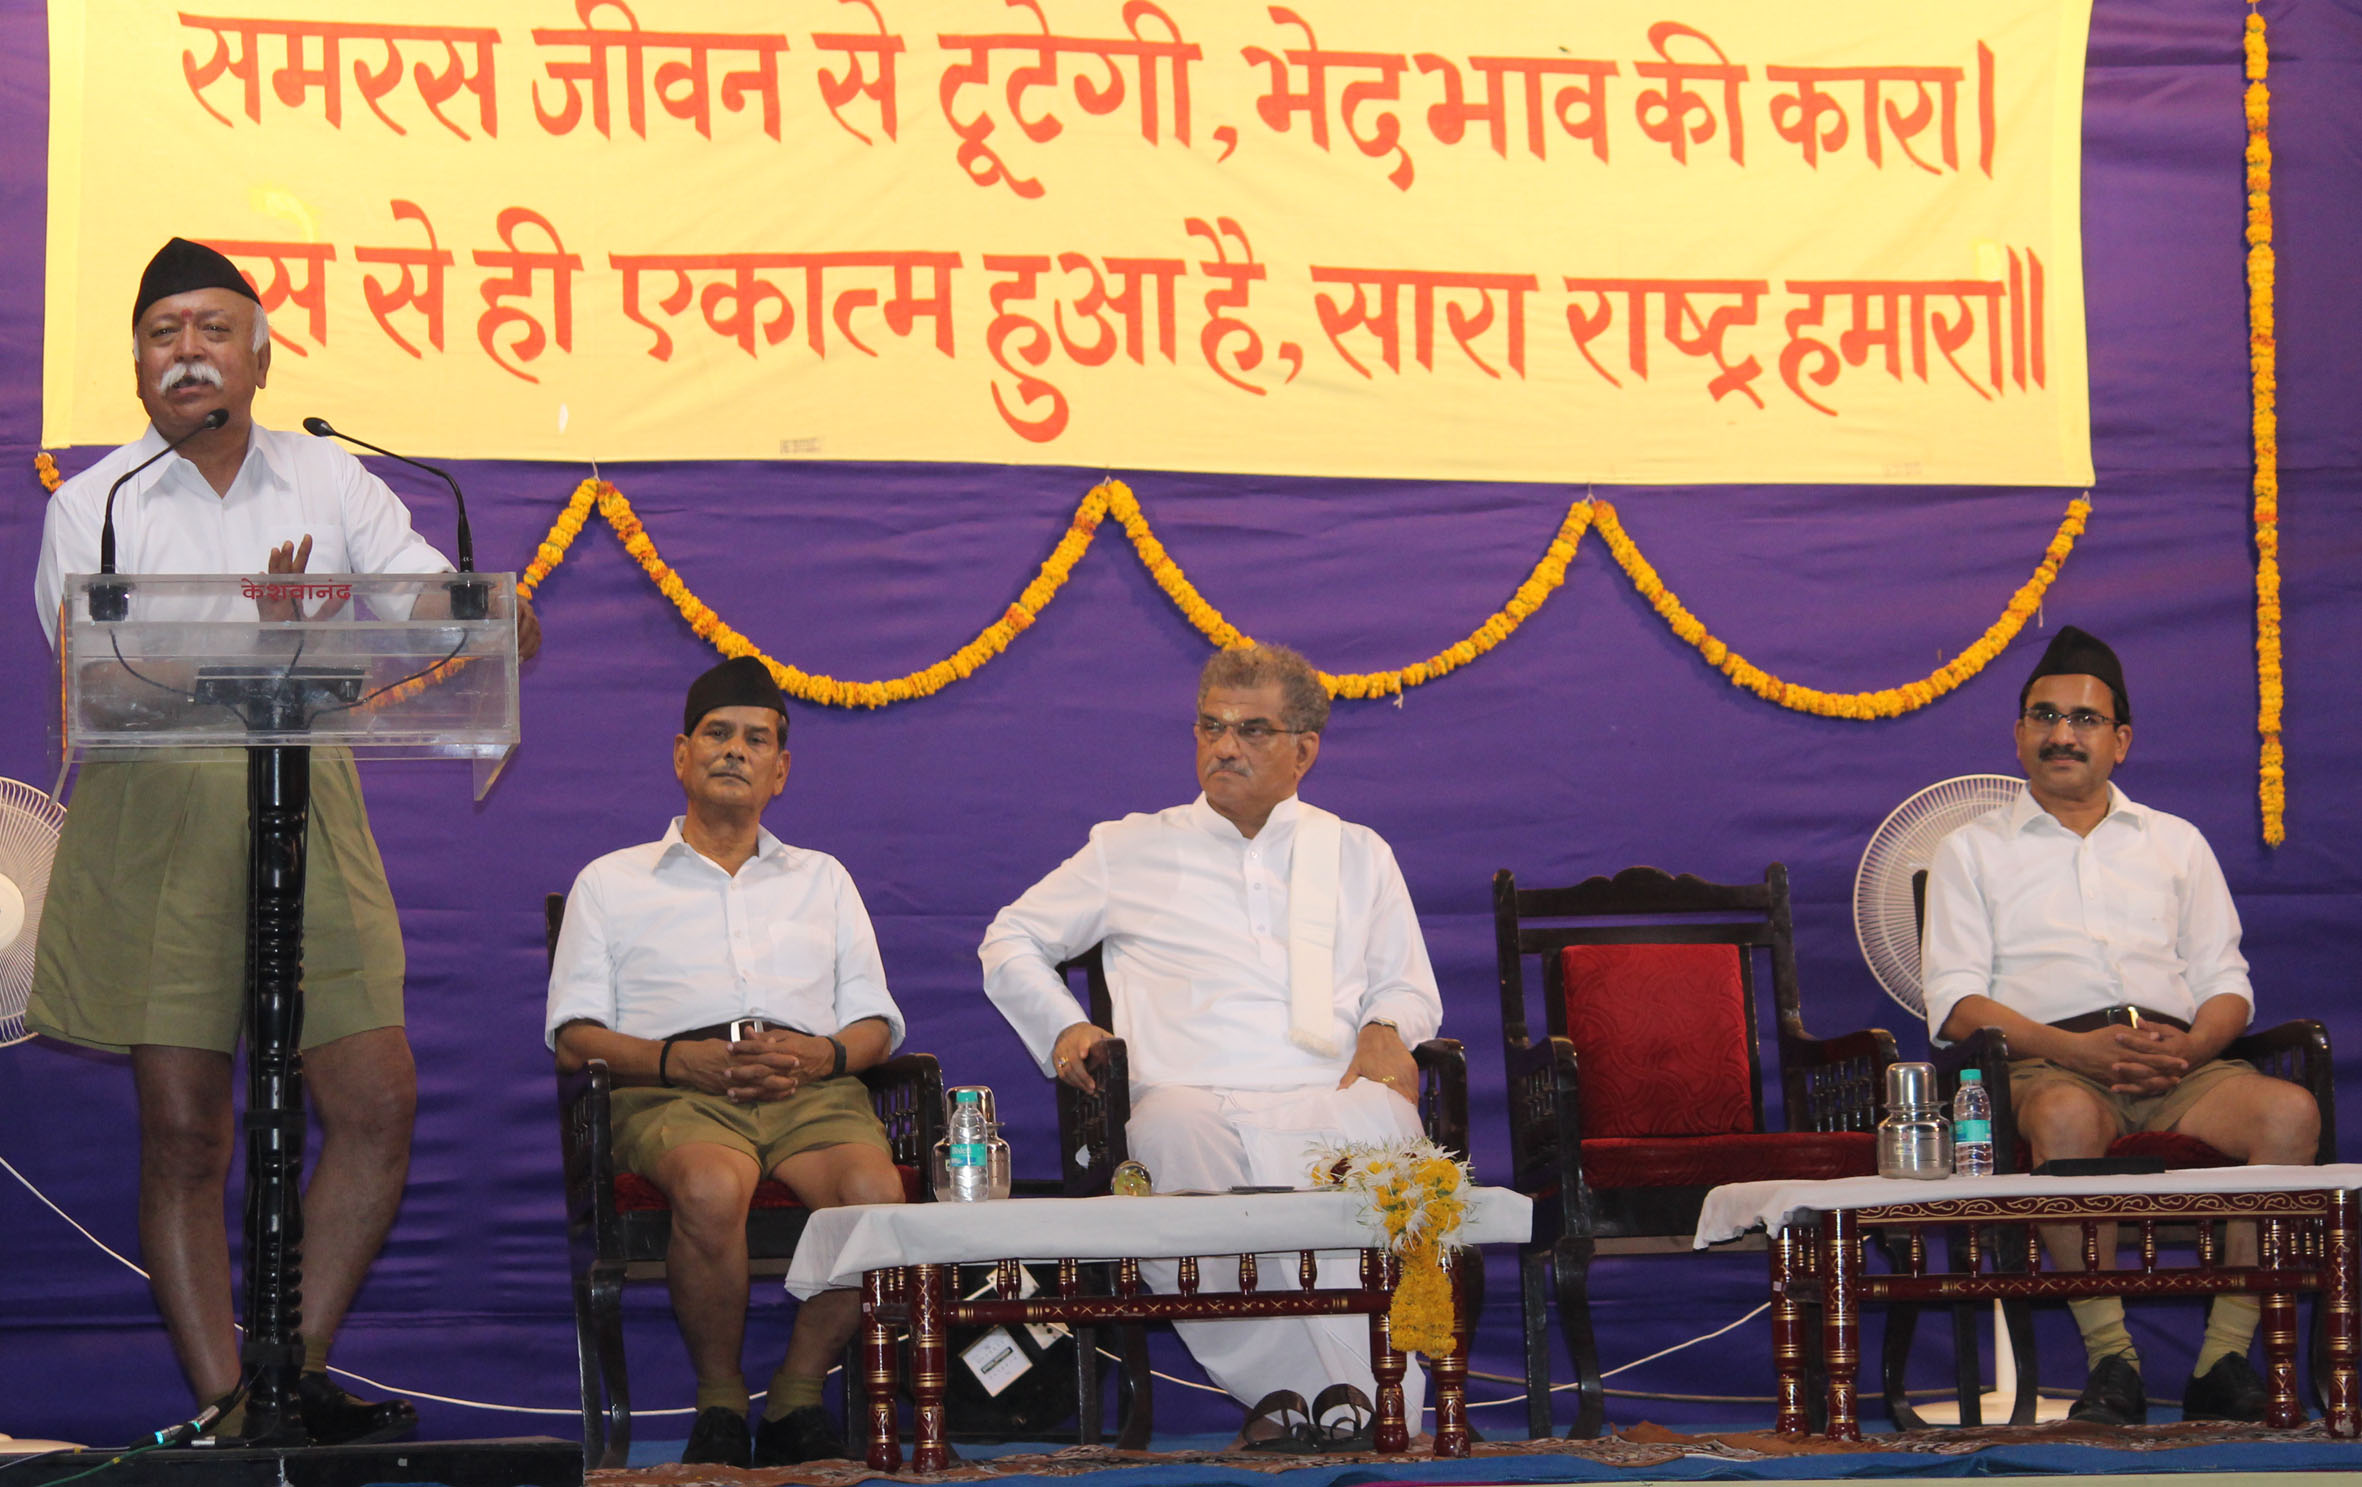 RSS Sarasanghachalak Mohan Bhagwat addressing